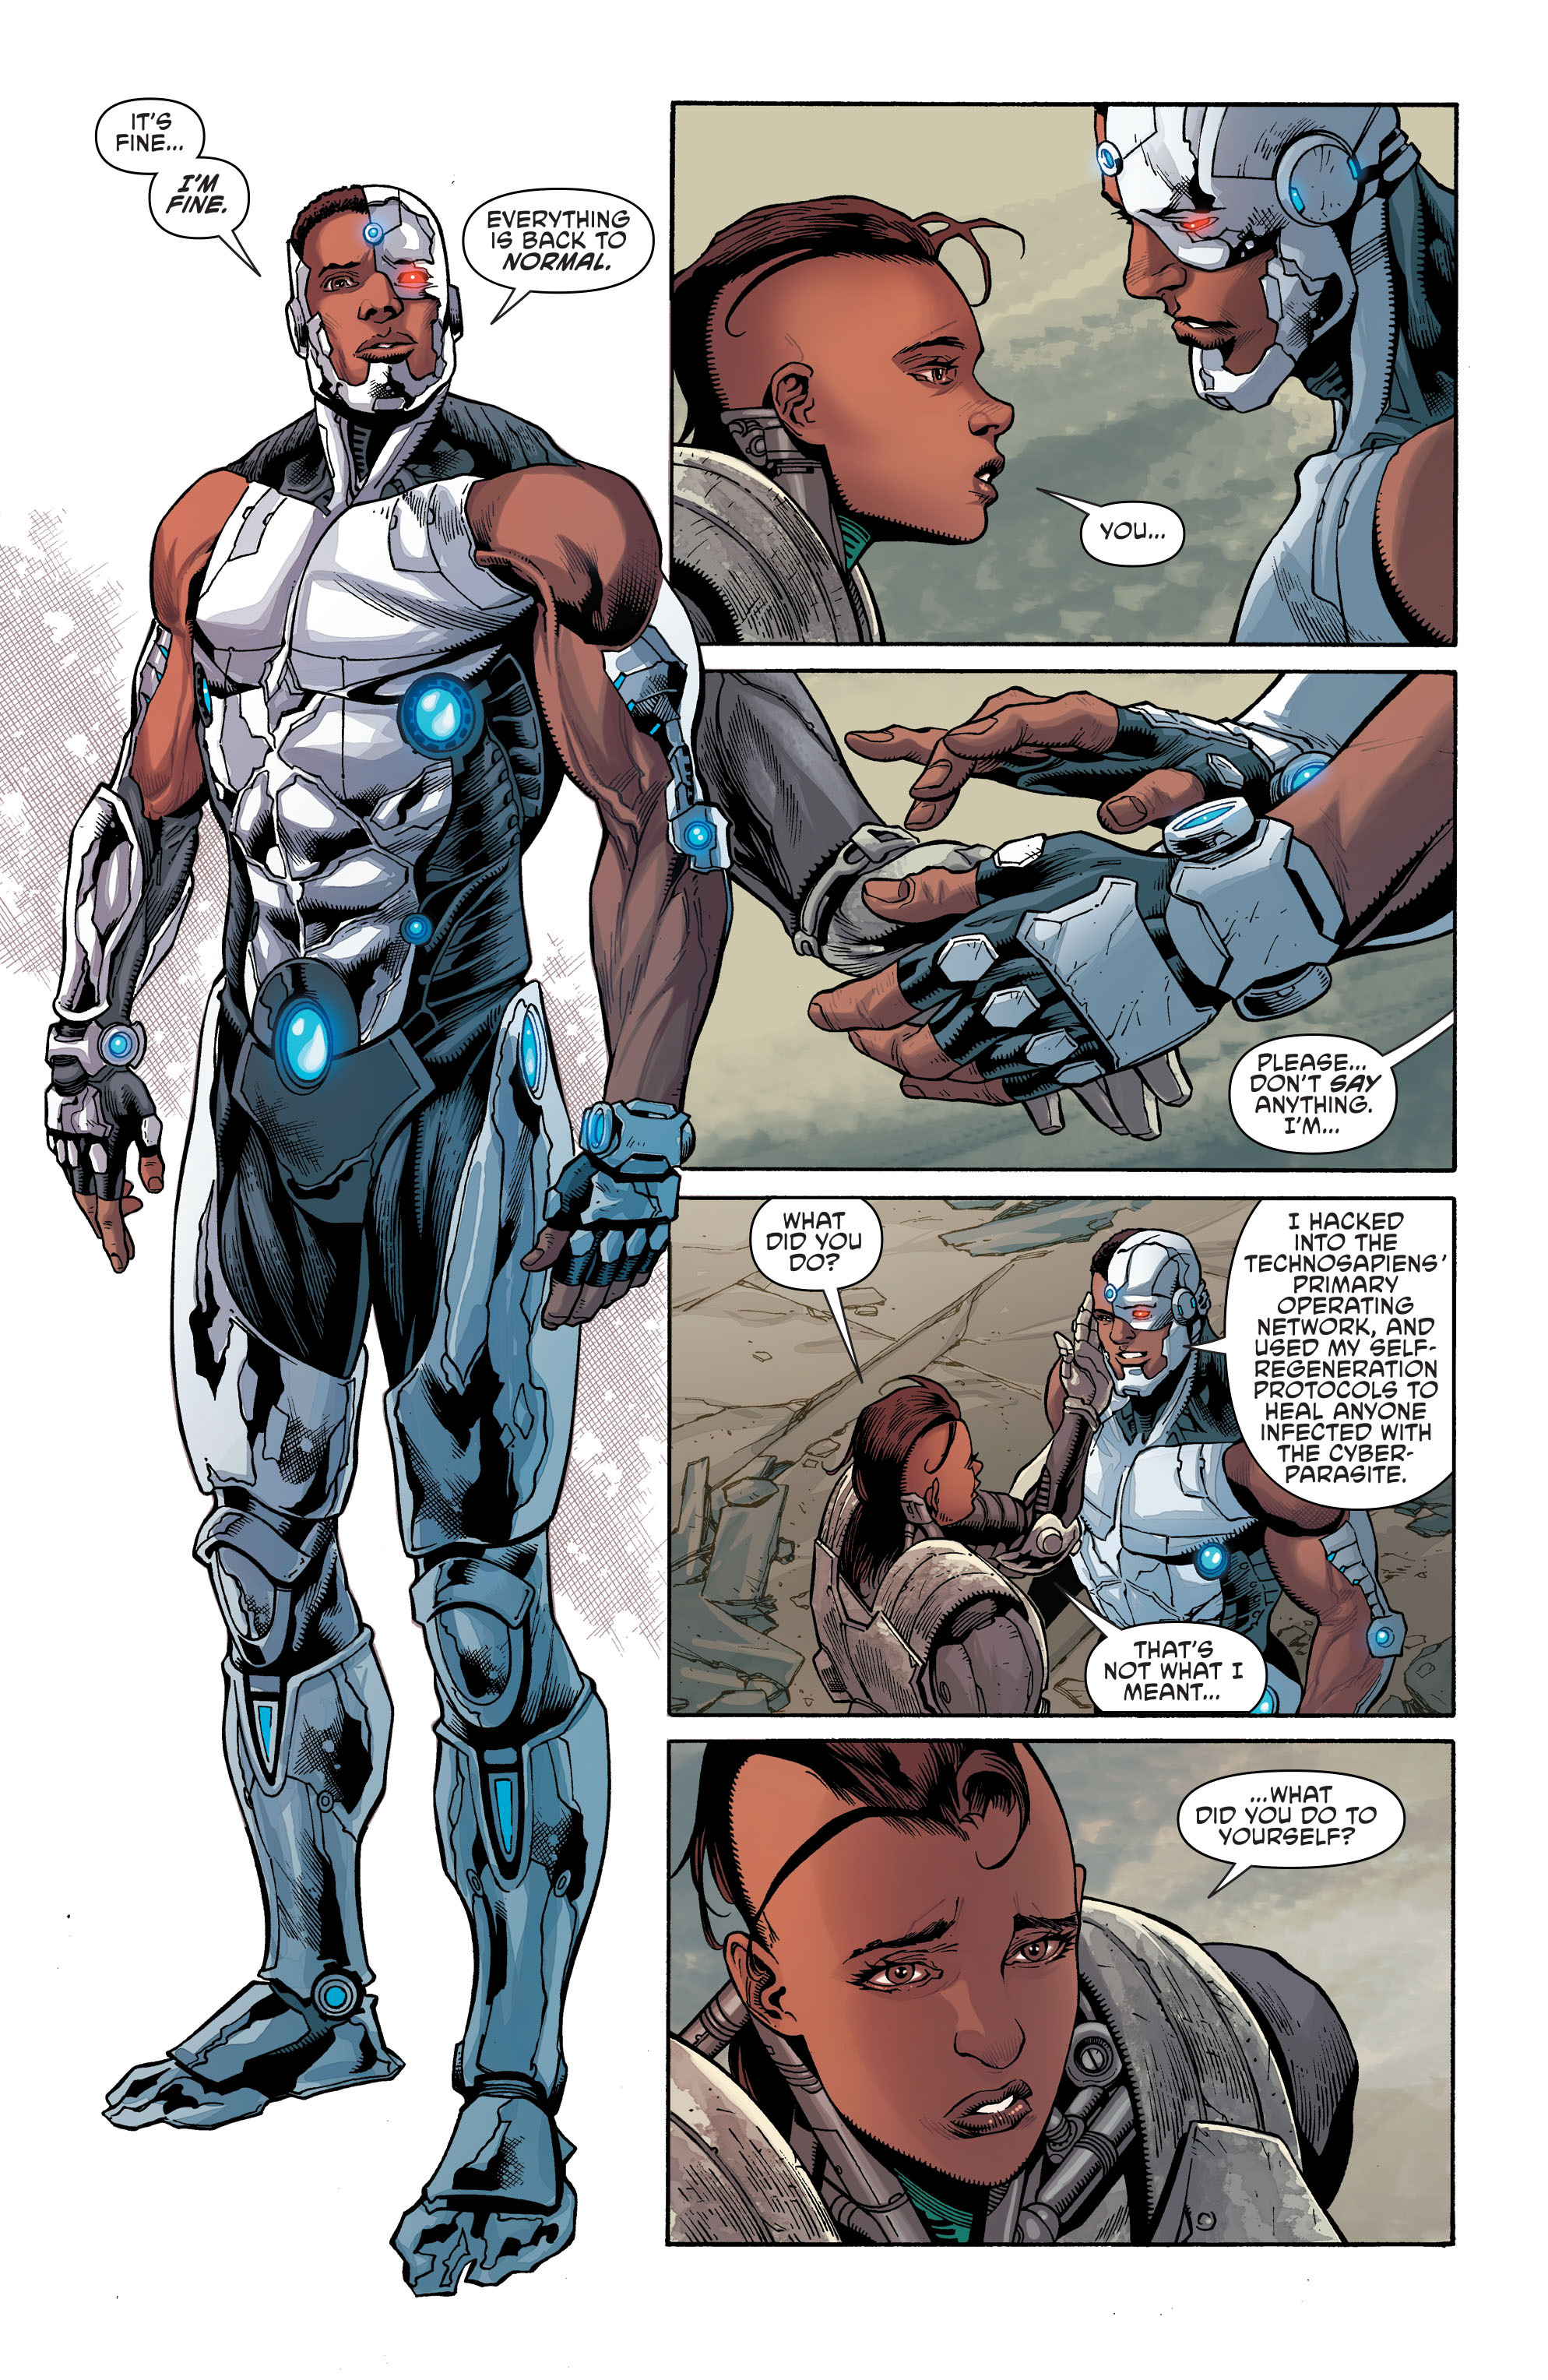 Cyborg 2015 Issue 6 Read Cyborg 2015 Issue 6 Comic Online In High